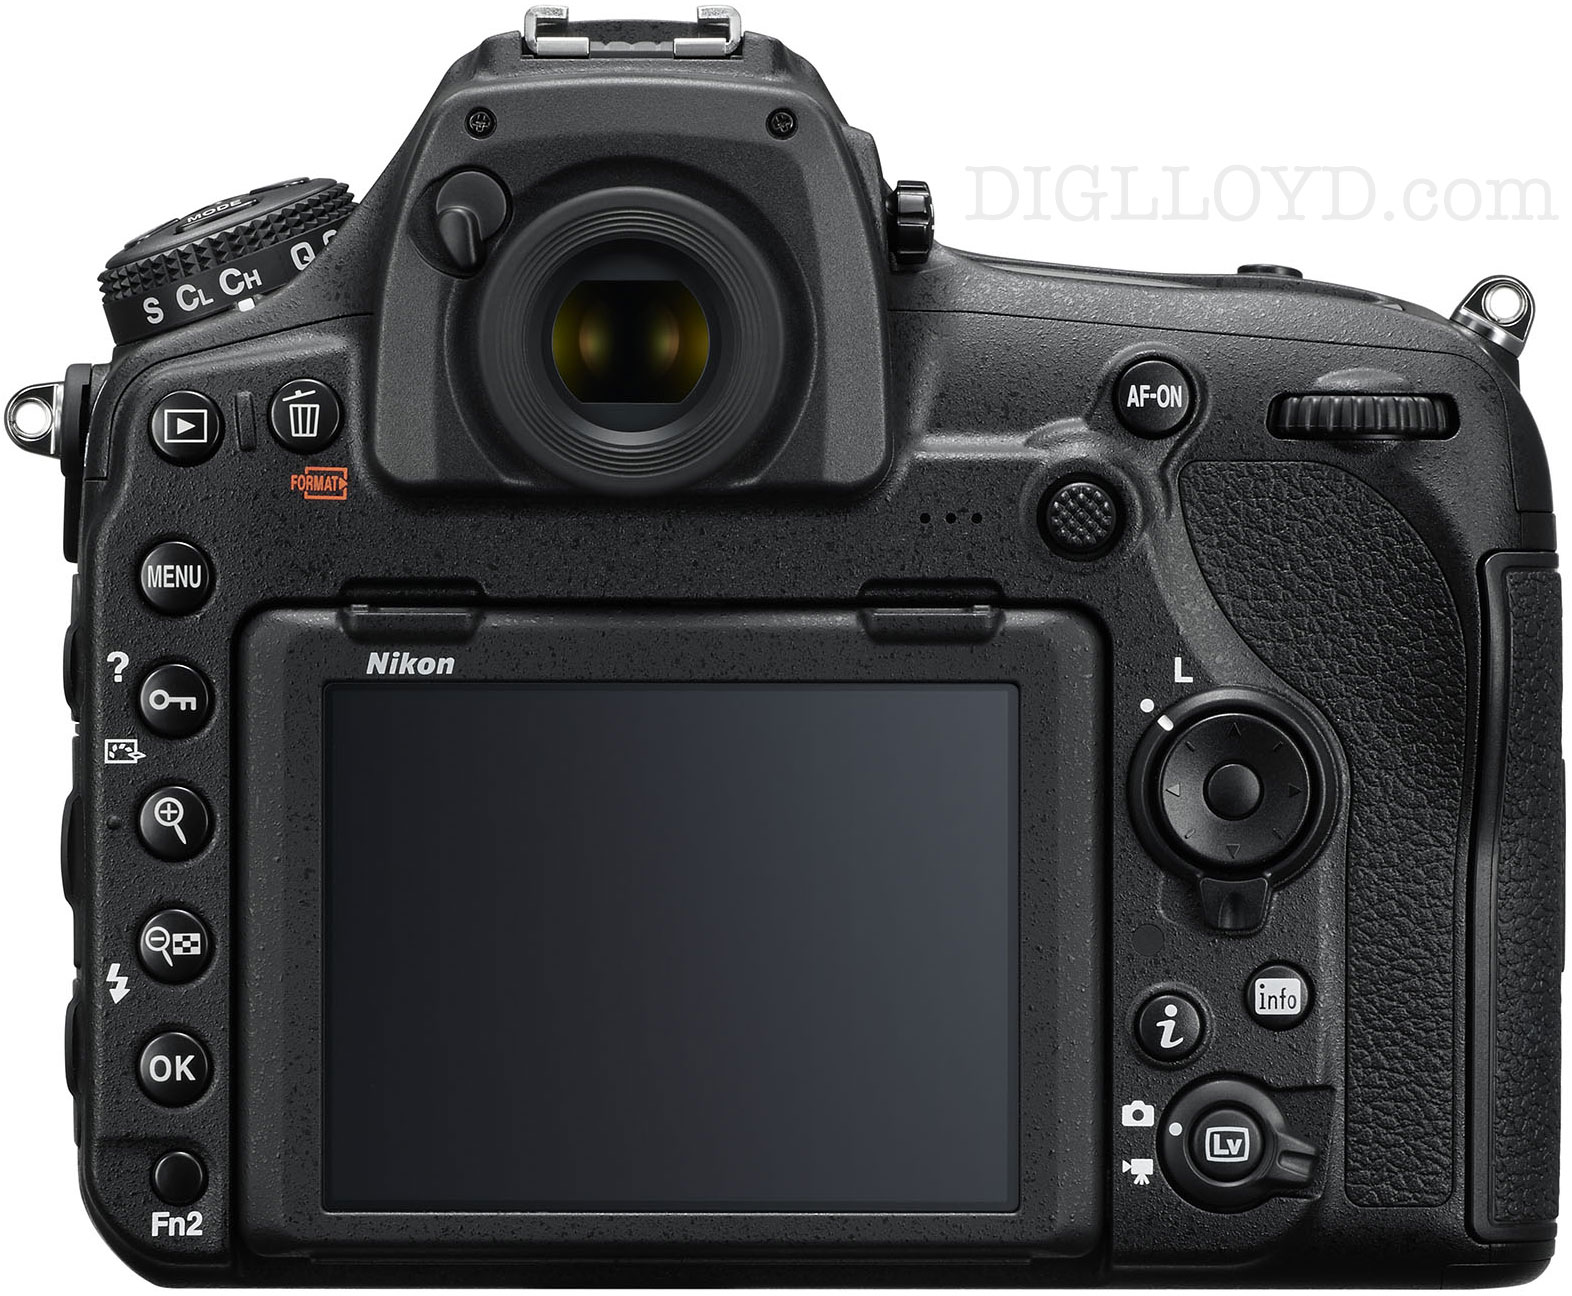 image of Nikon D850